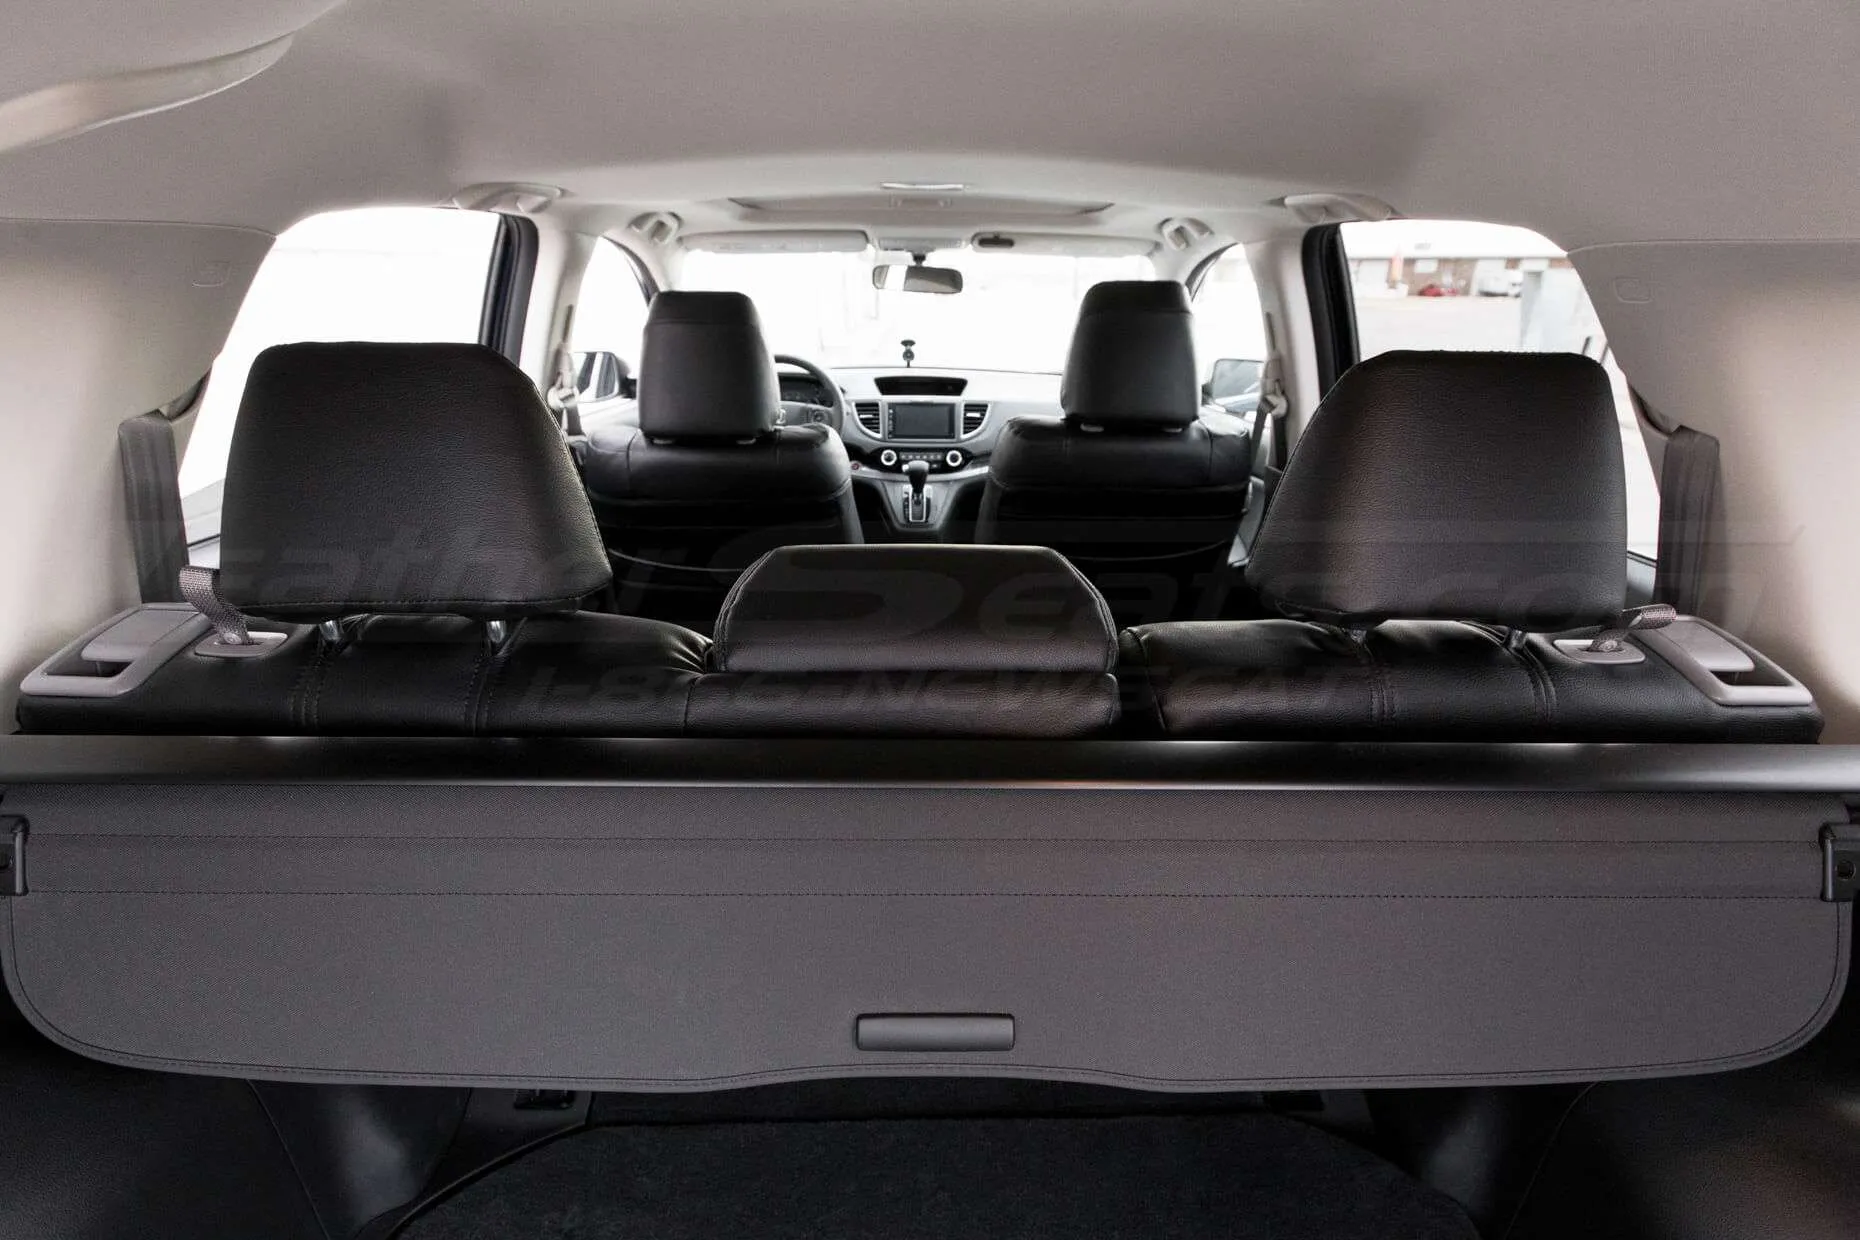 Honda CRV Leather Seat Kit - Black - Installed - Rear headrests